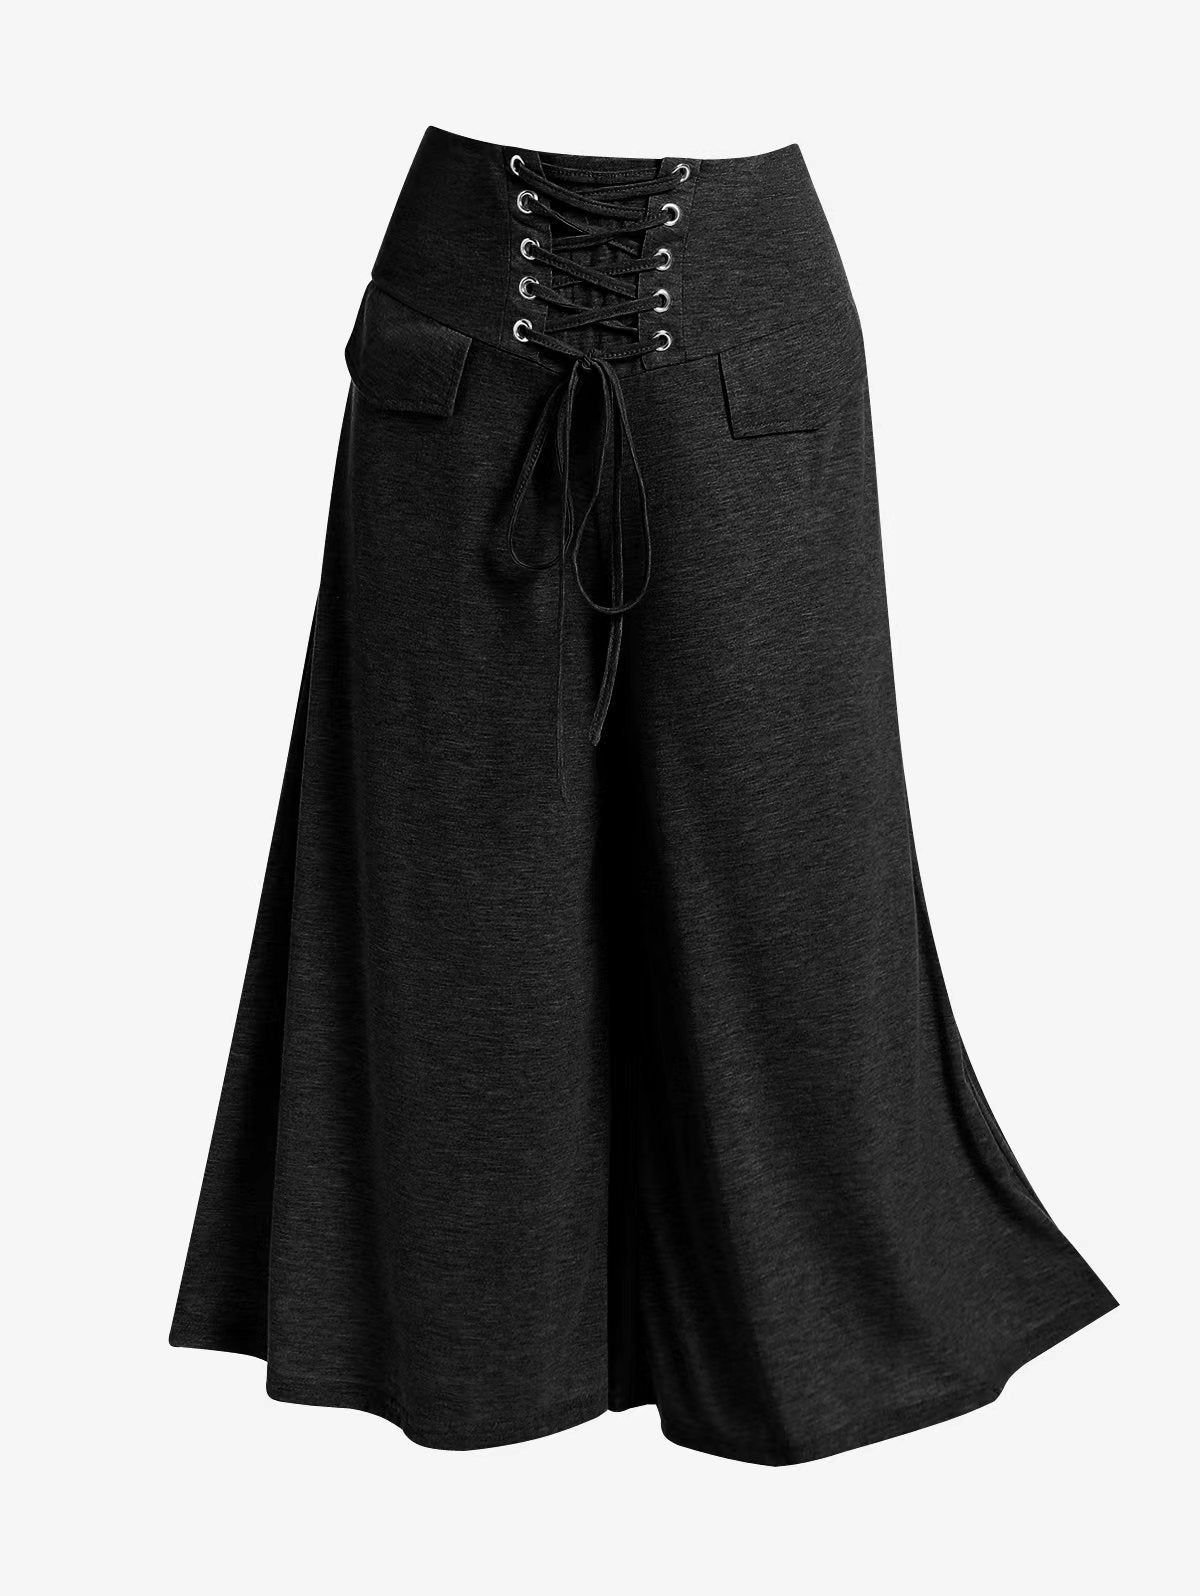 Pants  | Women's Clothing High Waist With Straps Plus Size Loose Pants | Black |  2XL| thecurvestory.myshopify.com